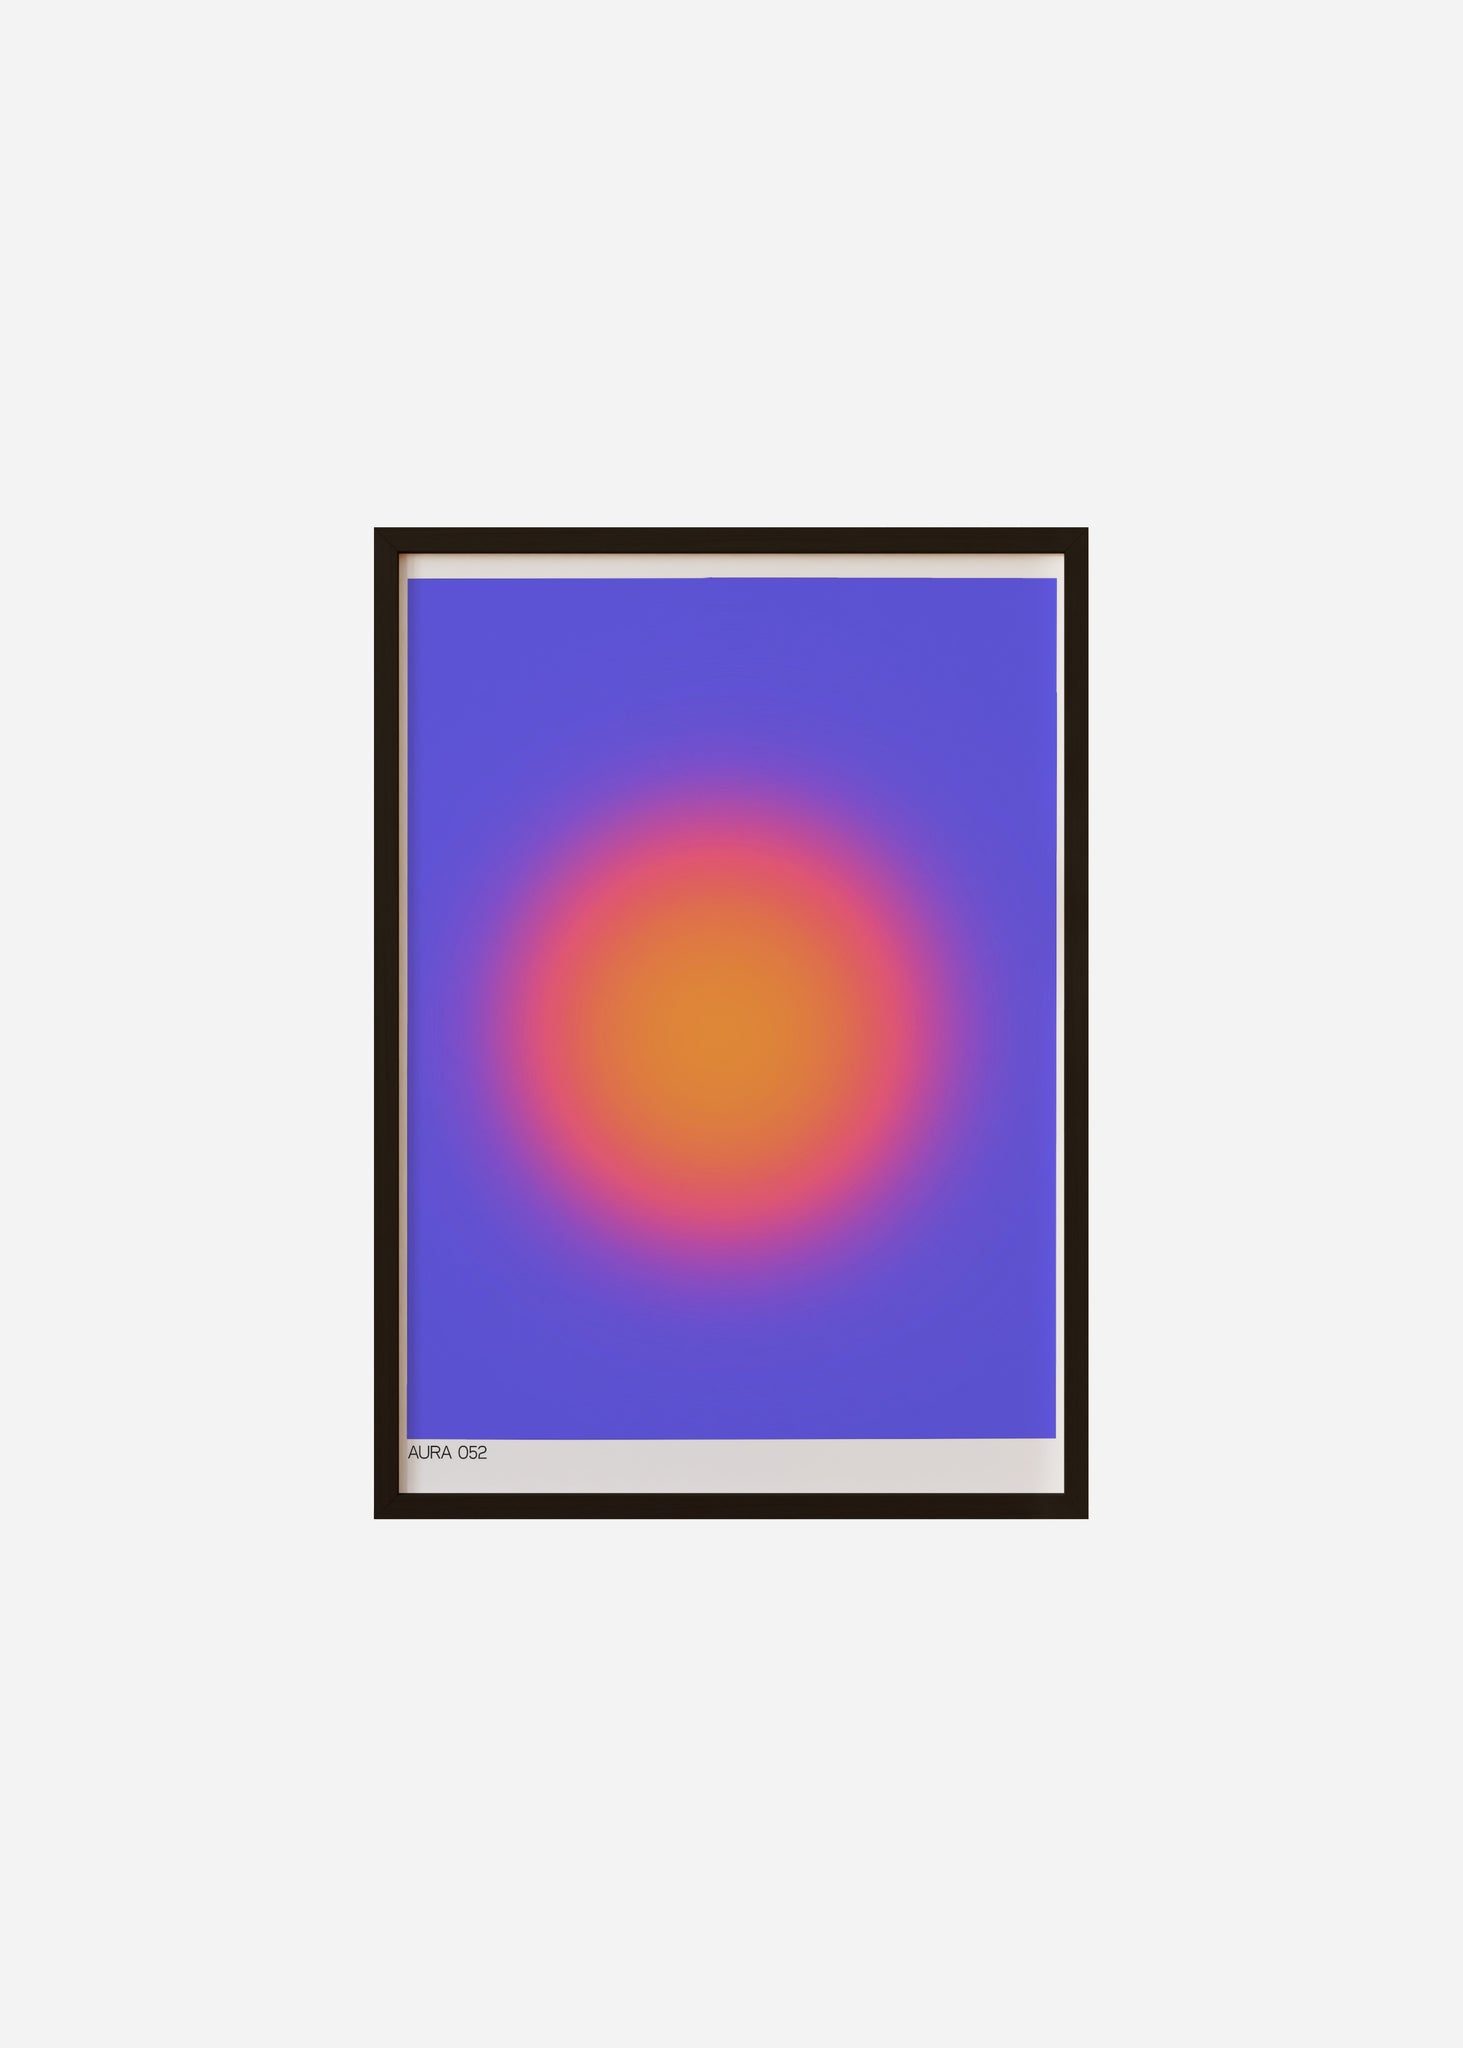 aura 052 Framed Print